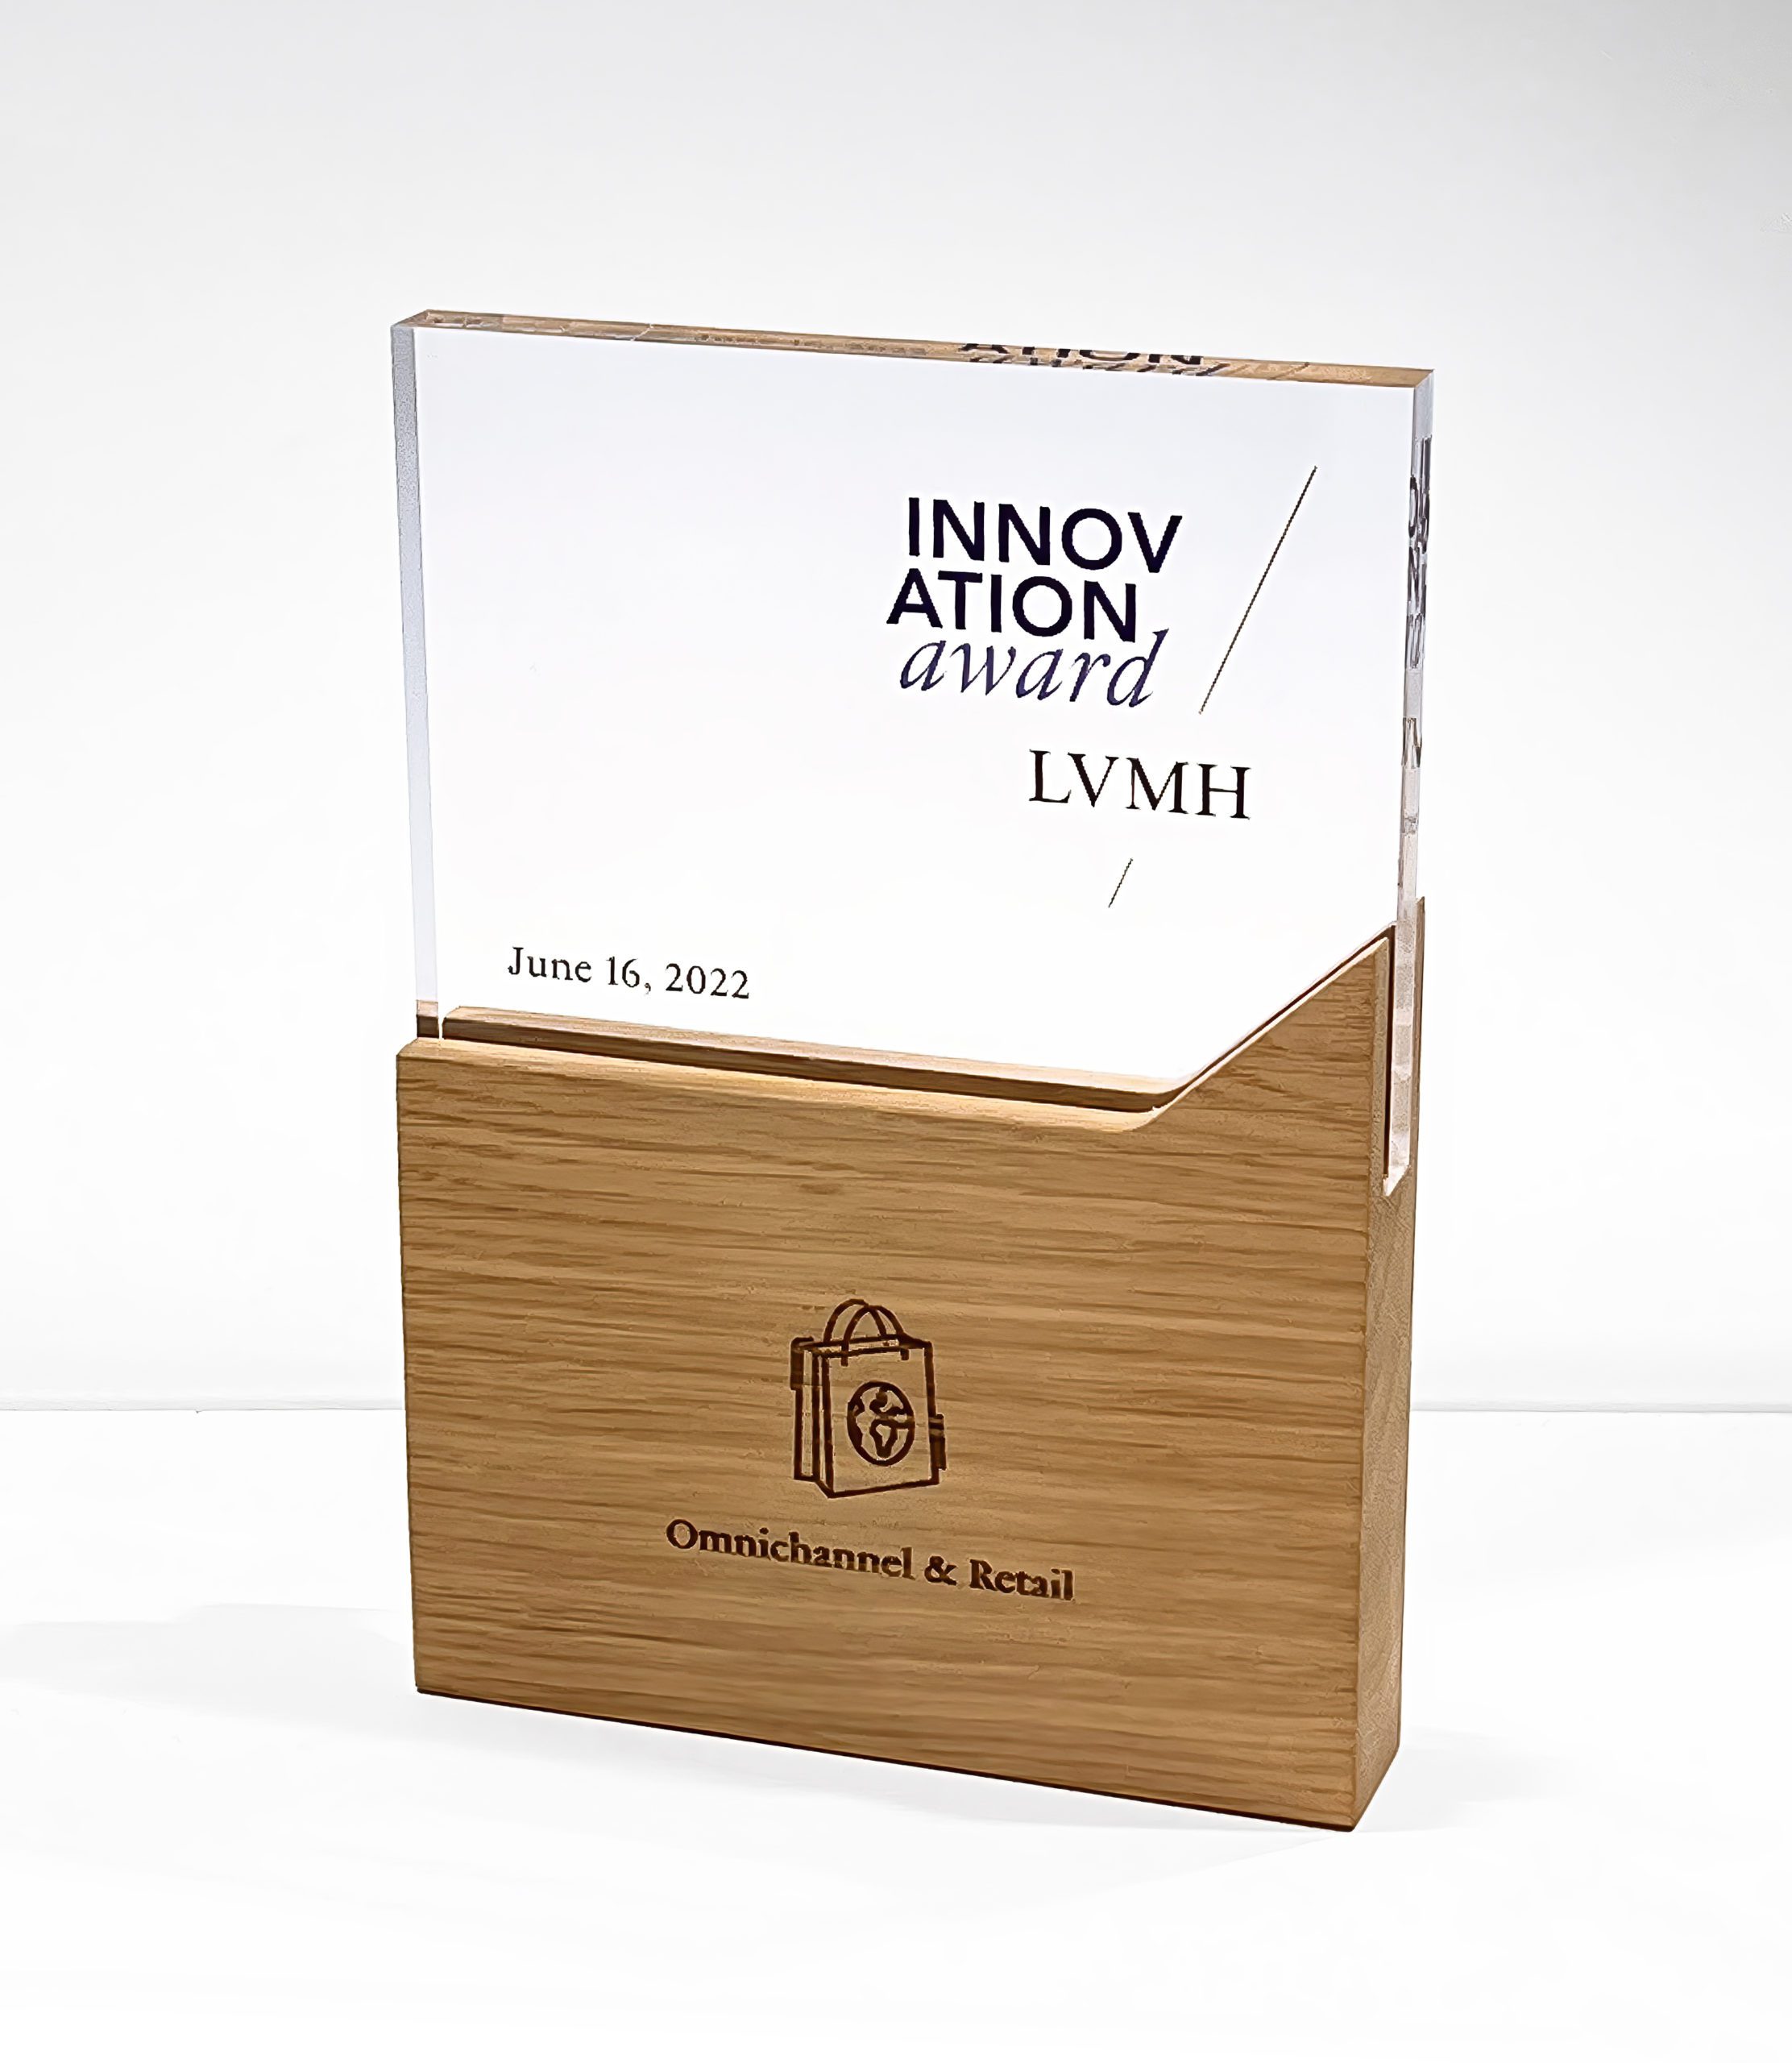 Disruption Award - LVMH IDEAL Awards - Credly